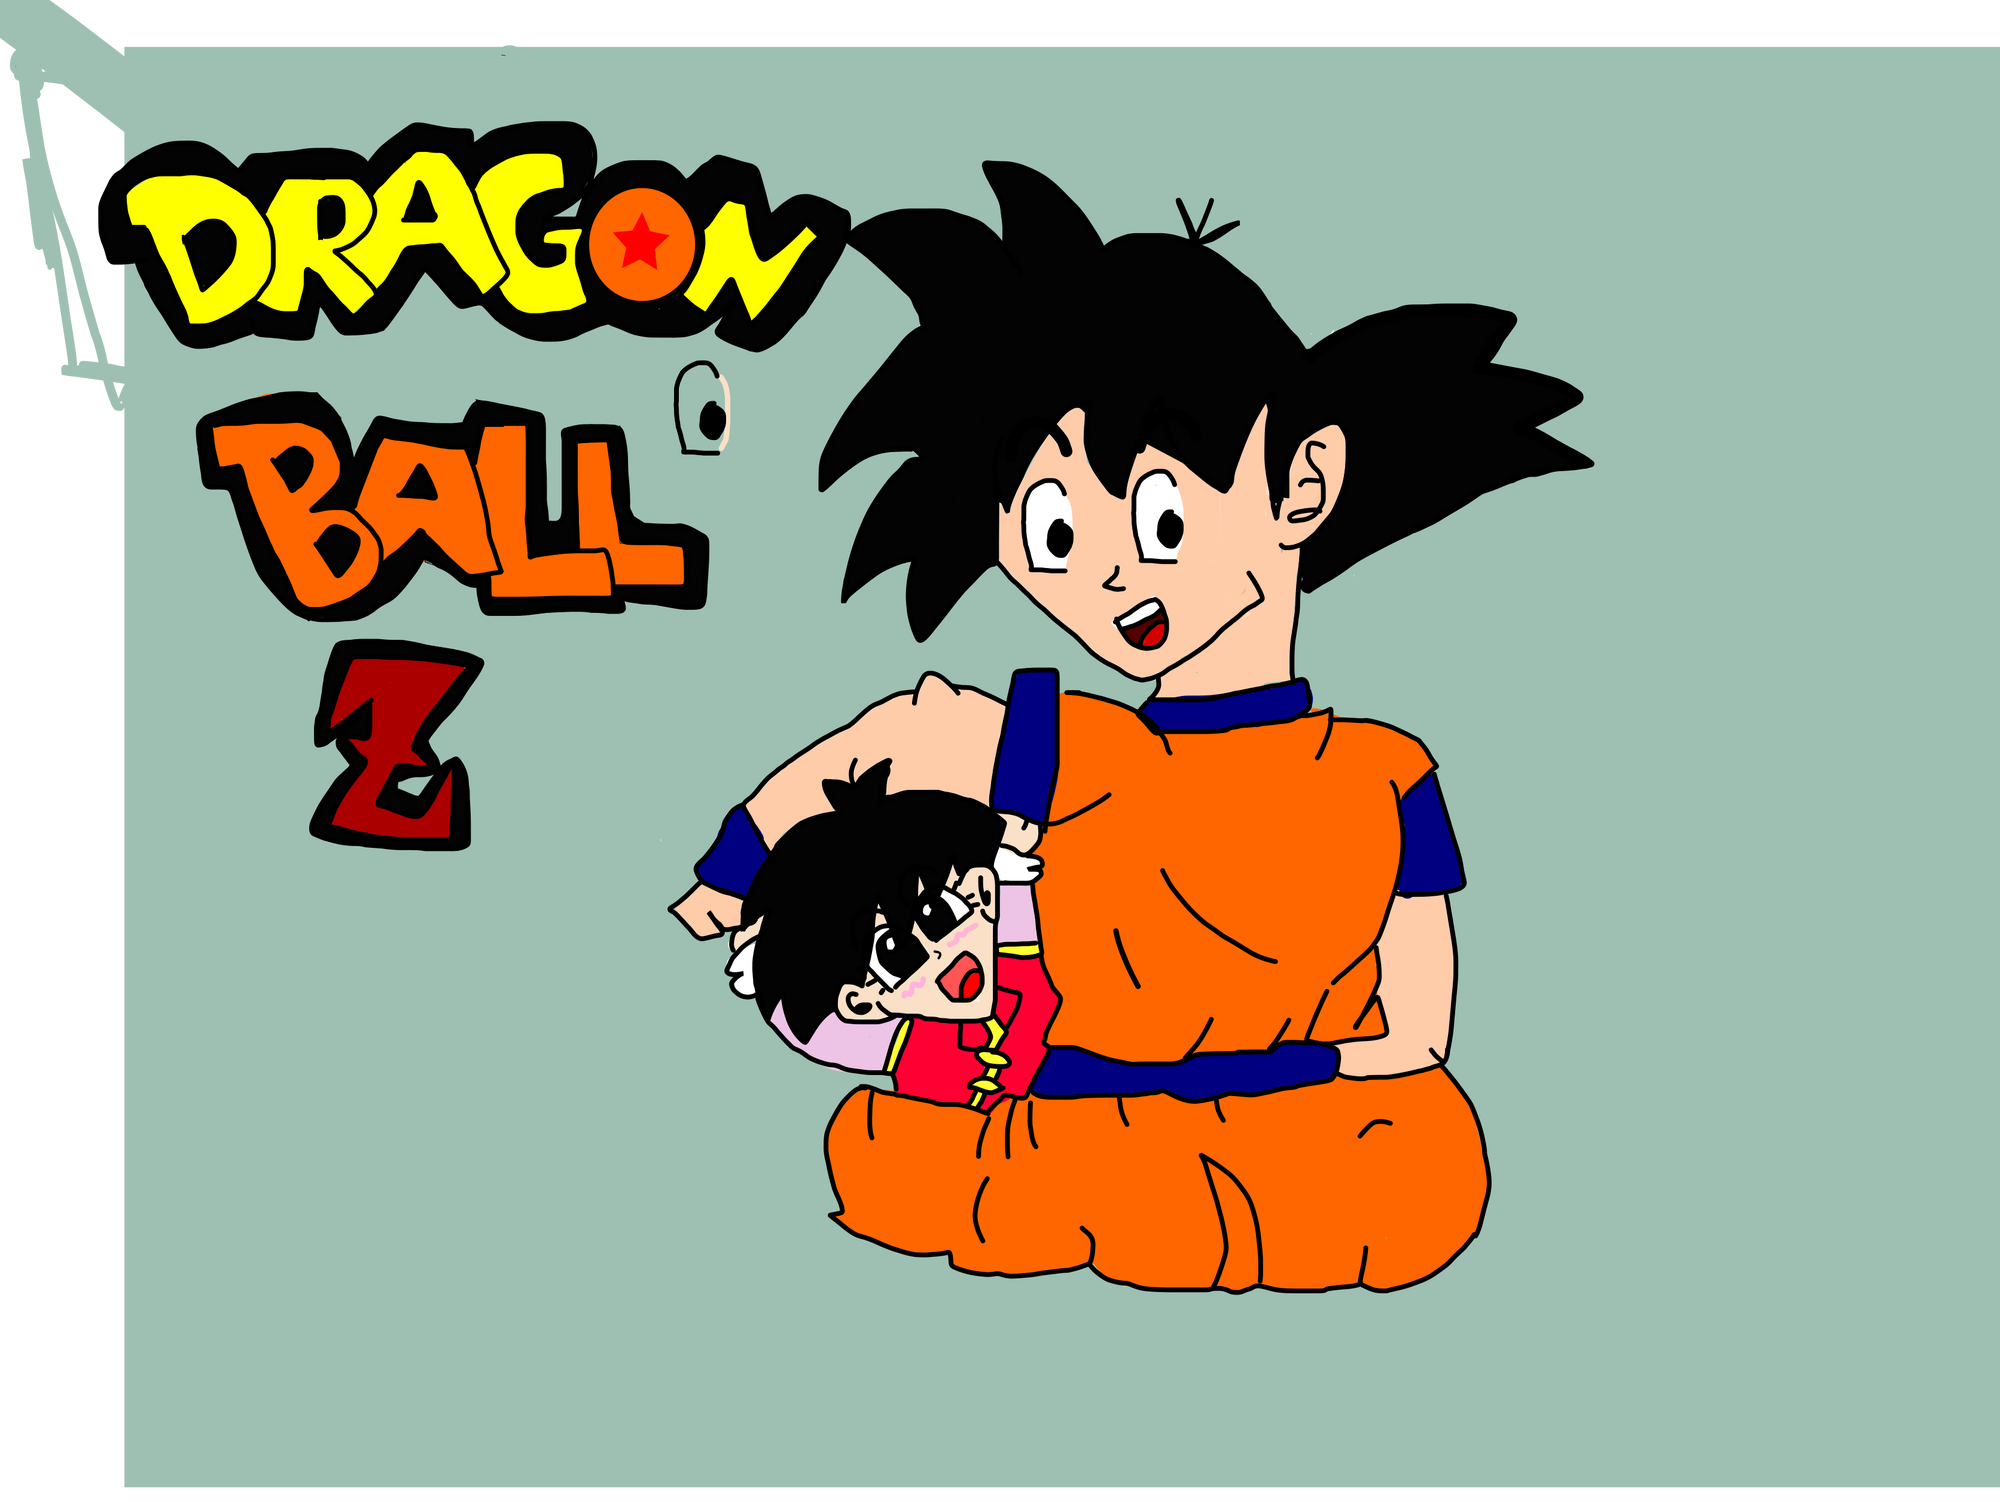 Download File:Goku and sora.svg | Dragon Ball Wiki | FANDOM powered ...